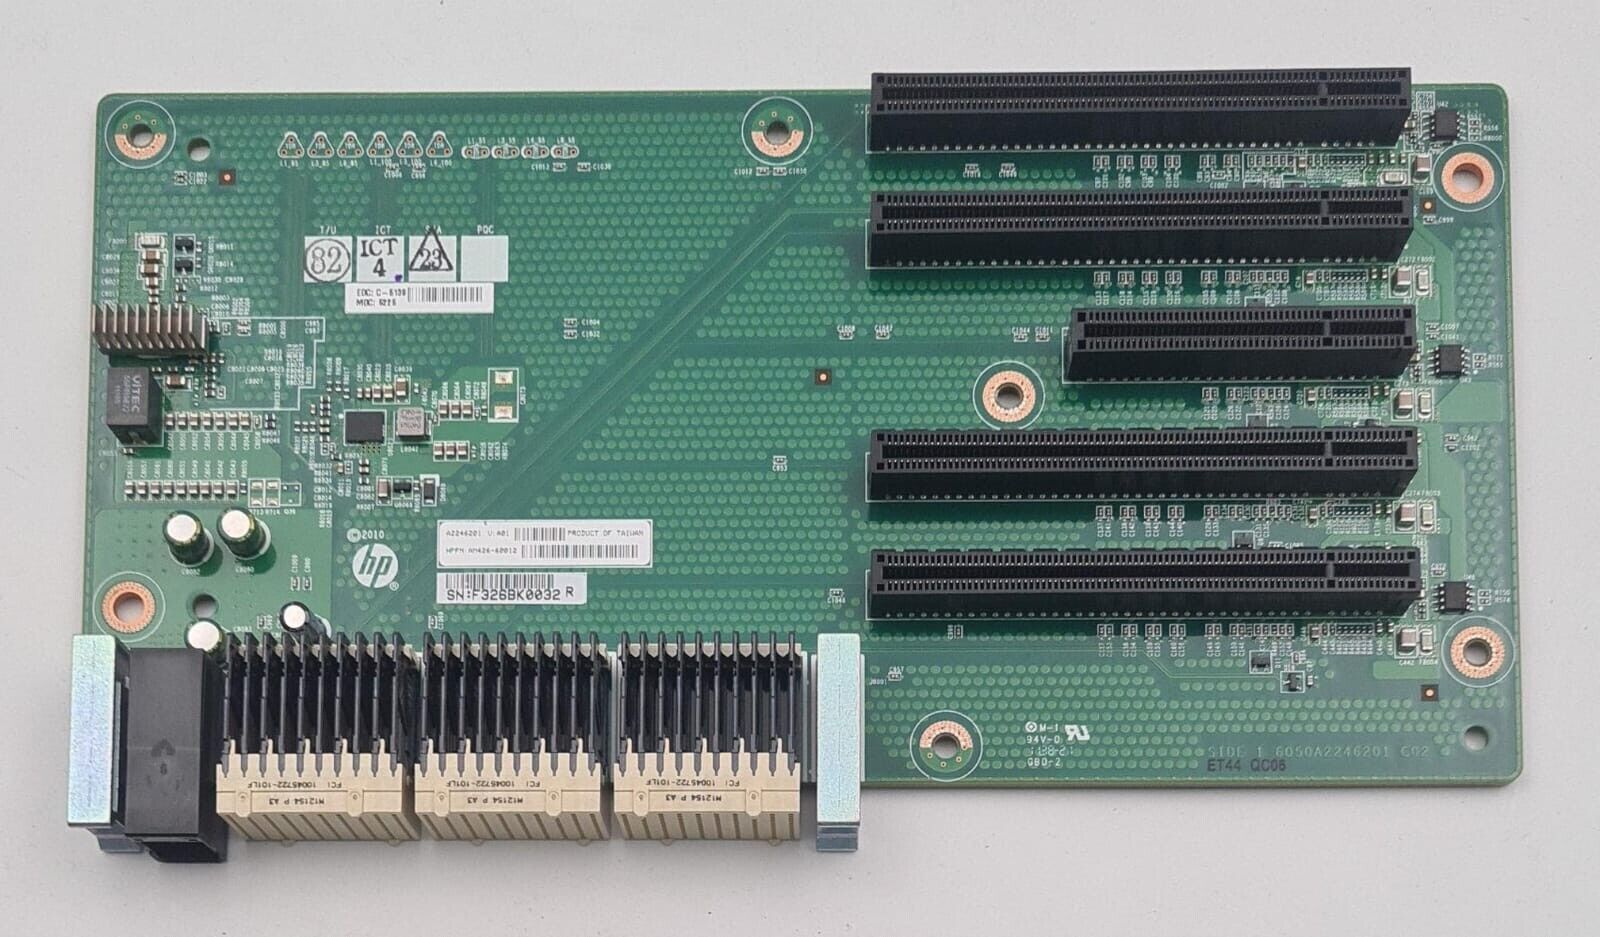 HP AM426-60012 Low-profile DL980 G7 PCIe Expansion Module Board